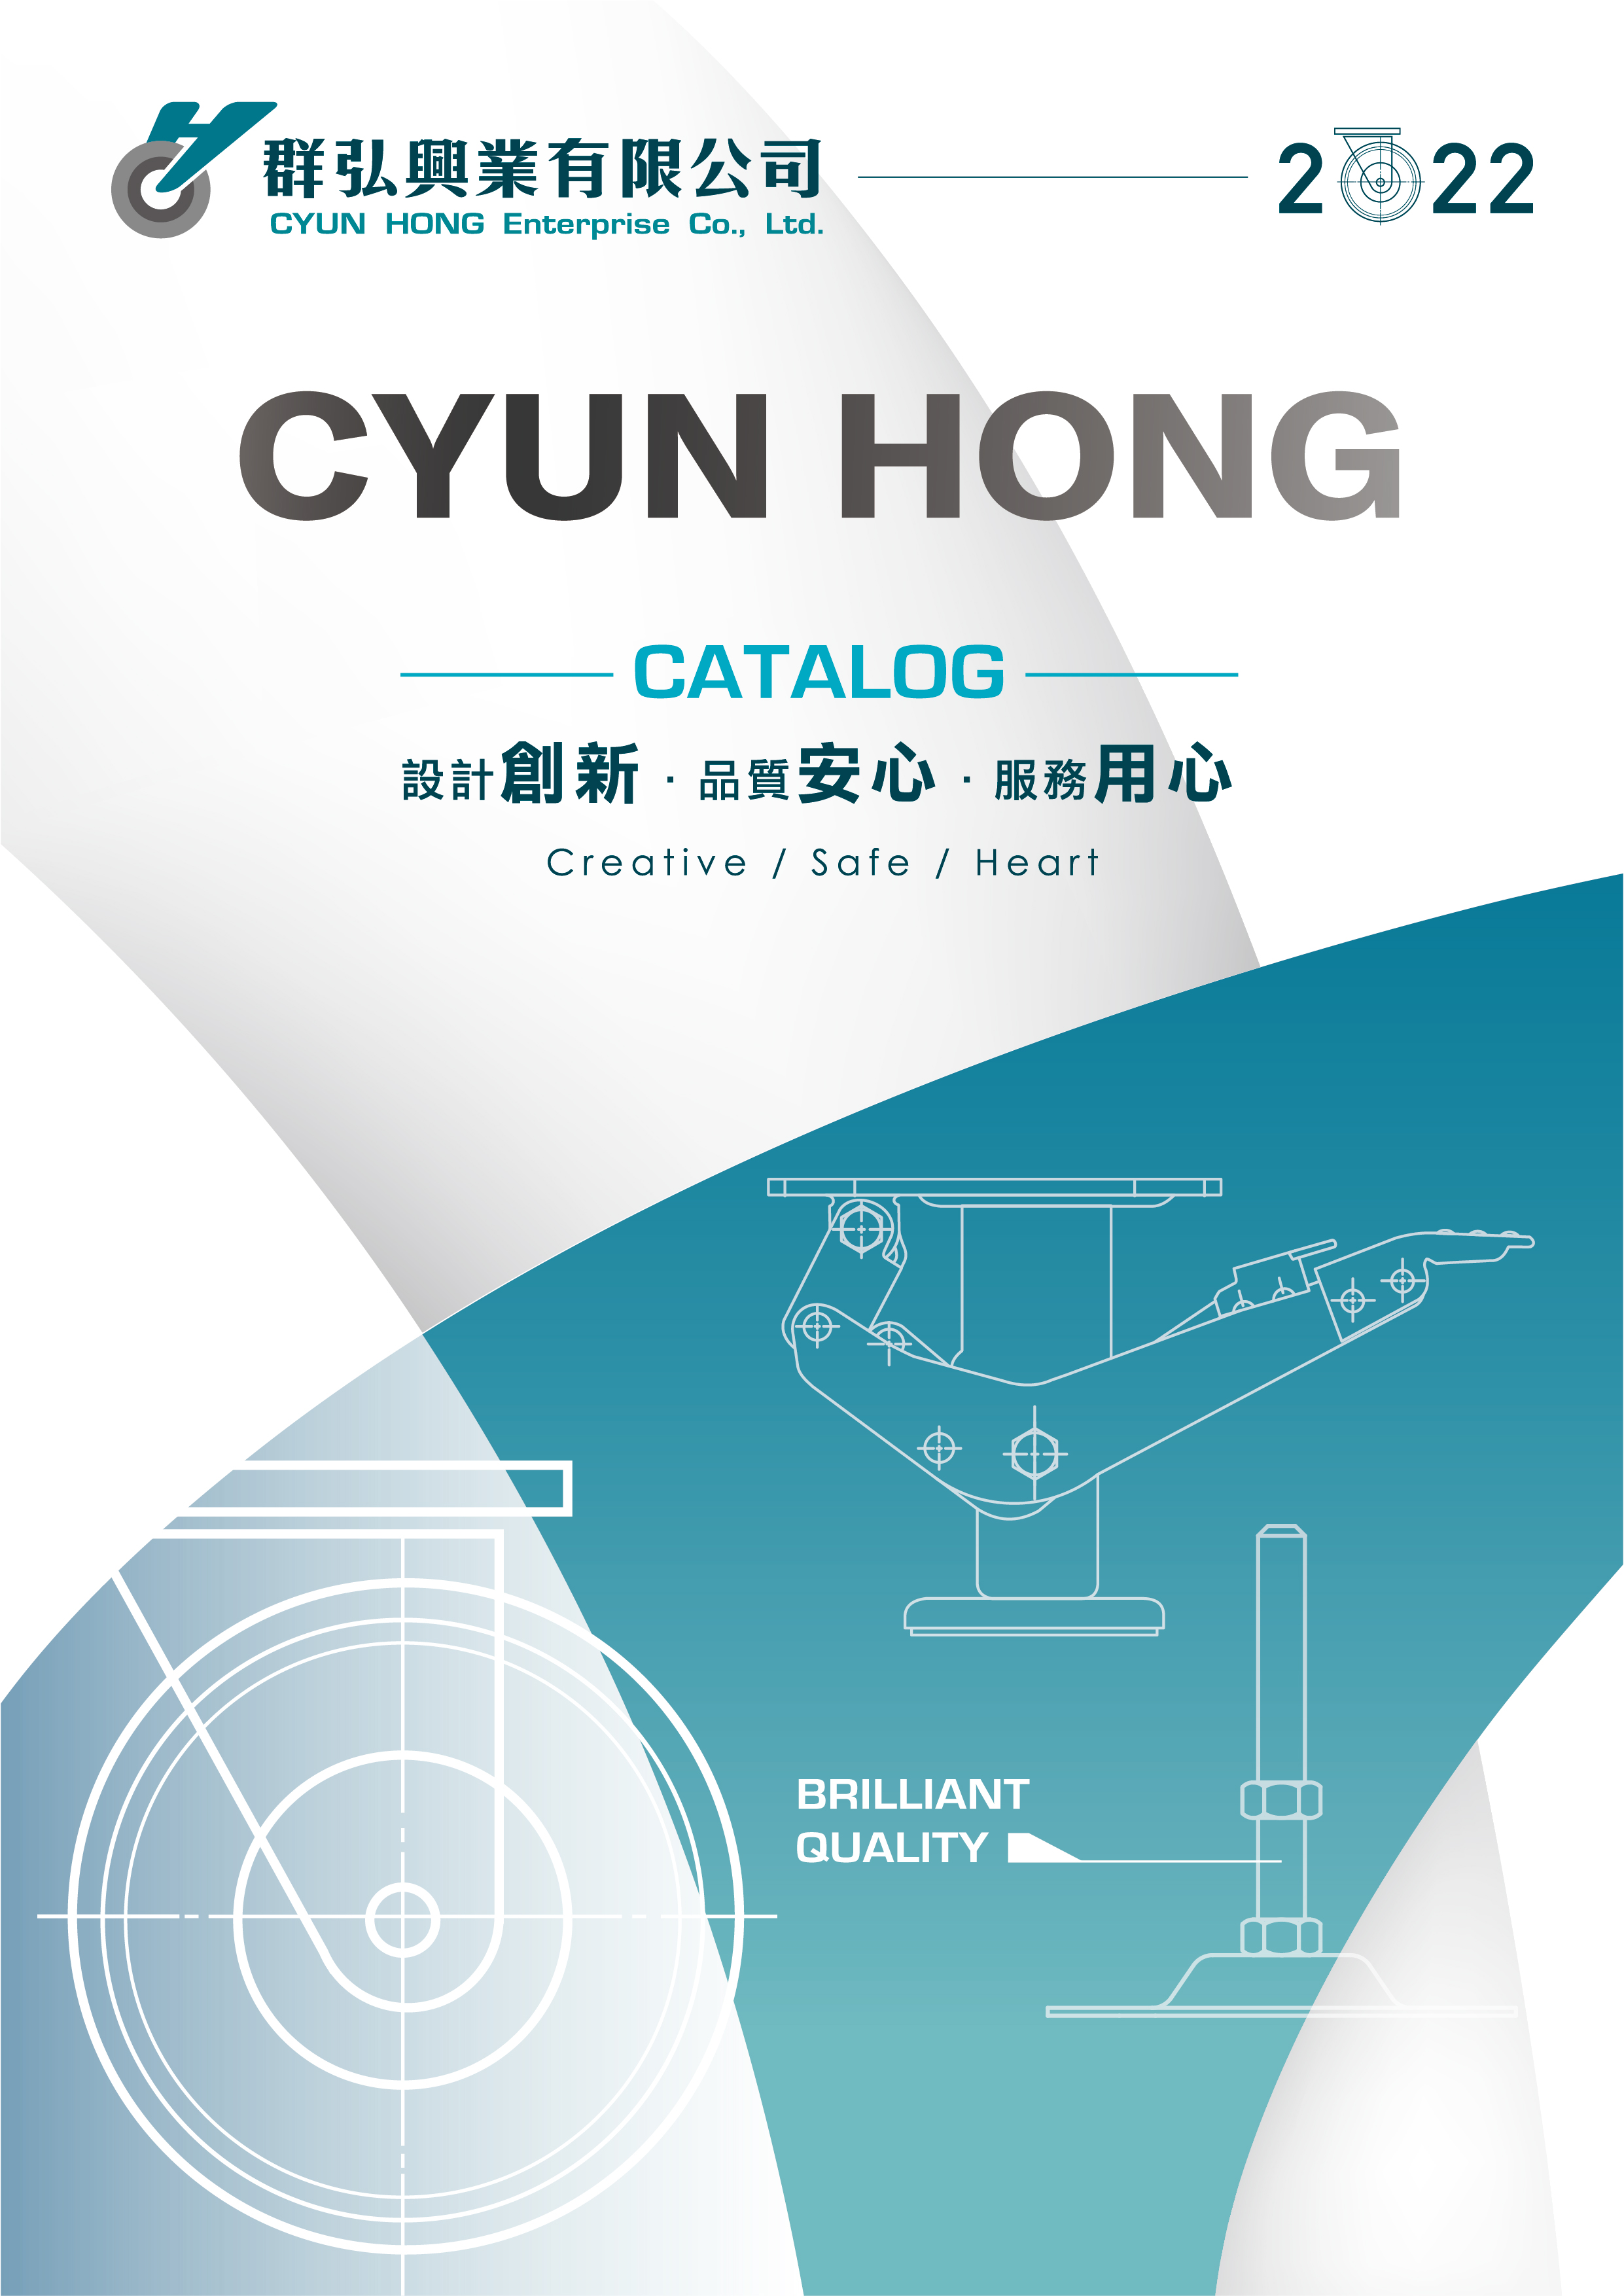 CYUN HONG ENTERPRISE CO., LTD._Online Catalogues